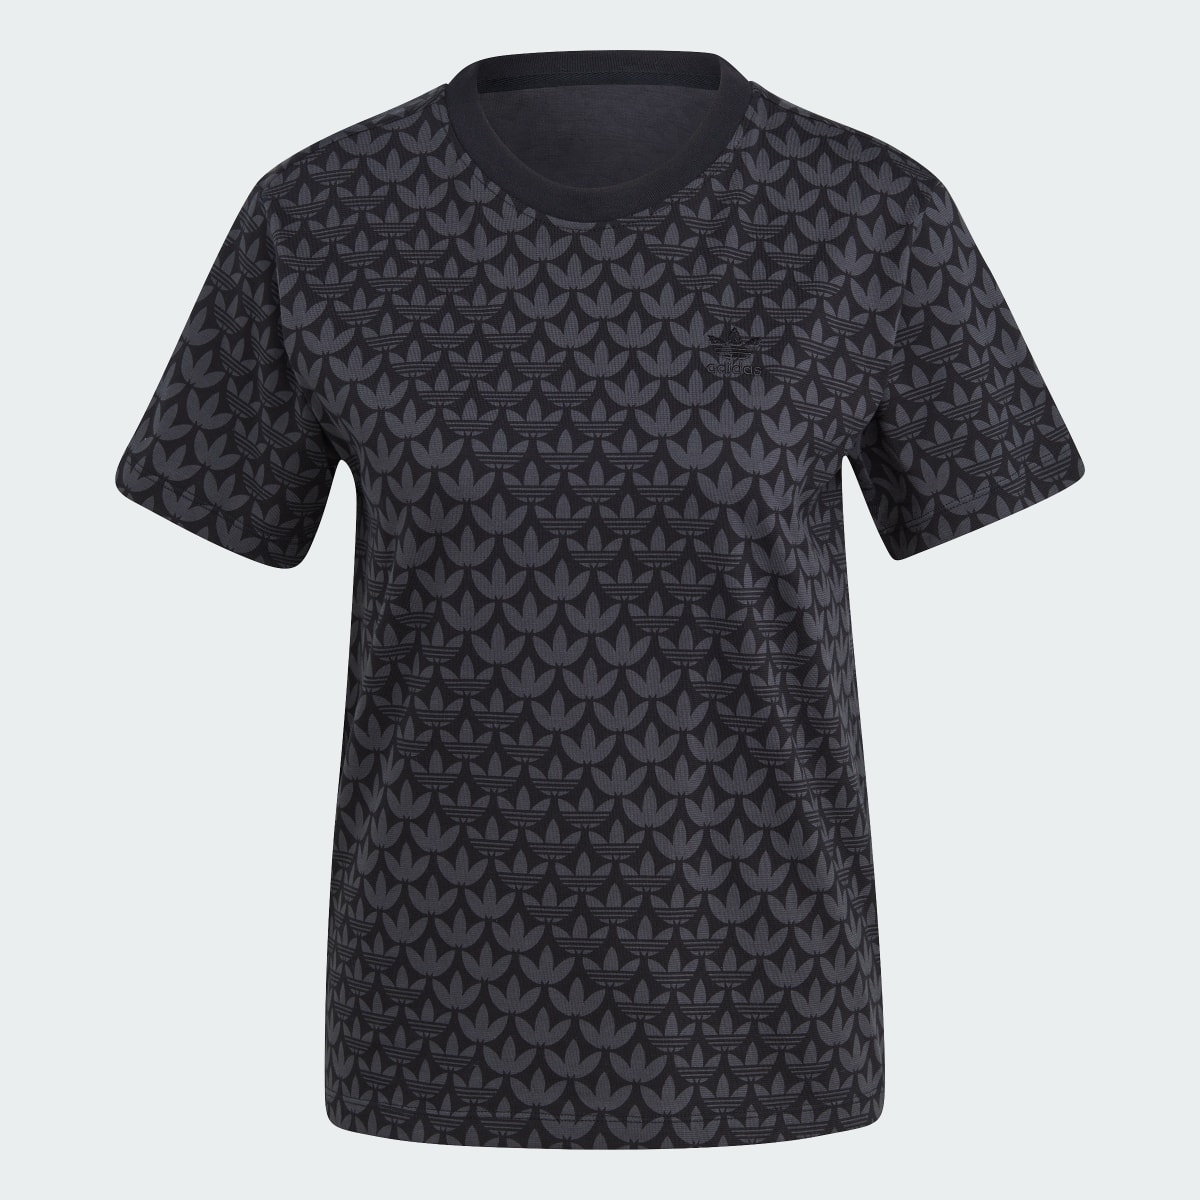 Adidas T-shirt Trefoil. 6